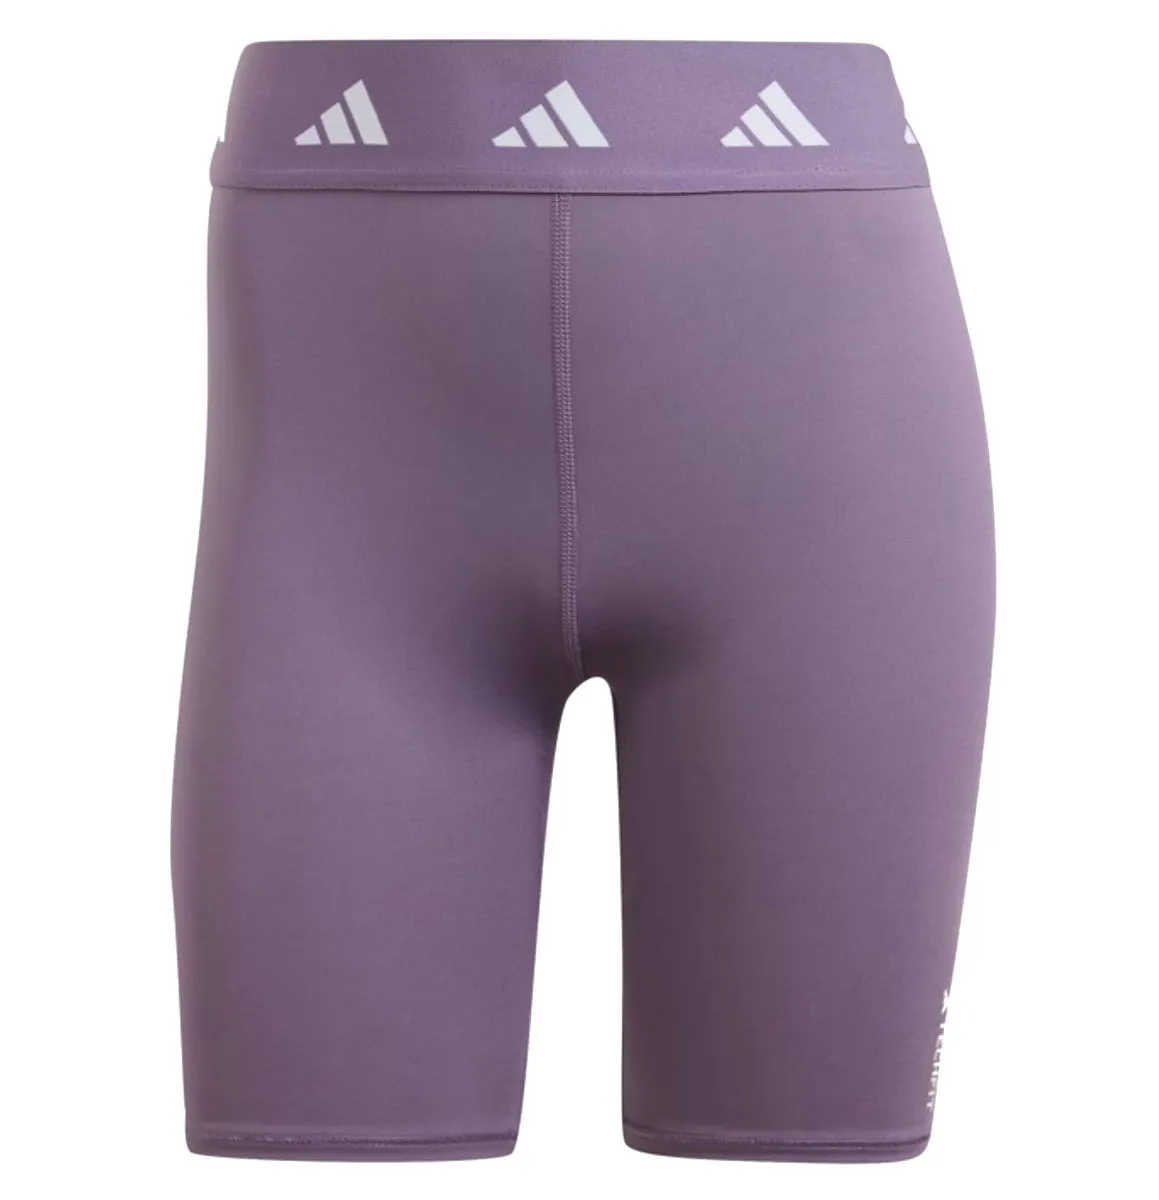 adidas ladies cycling shorts short light purple